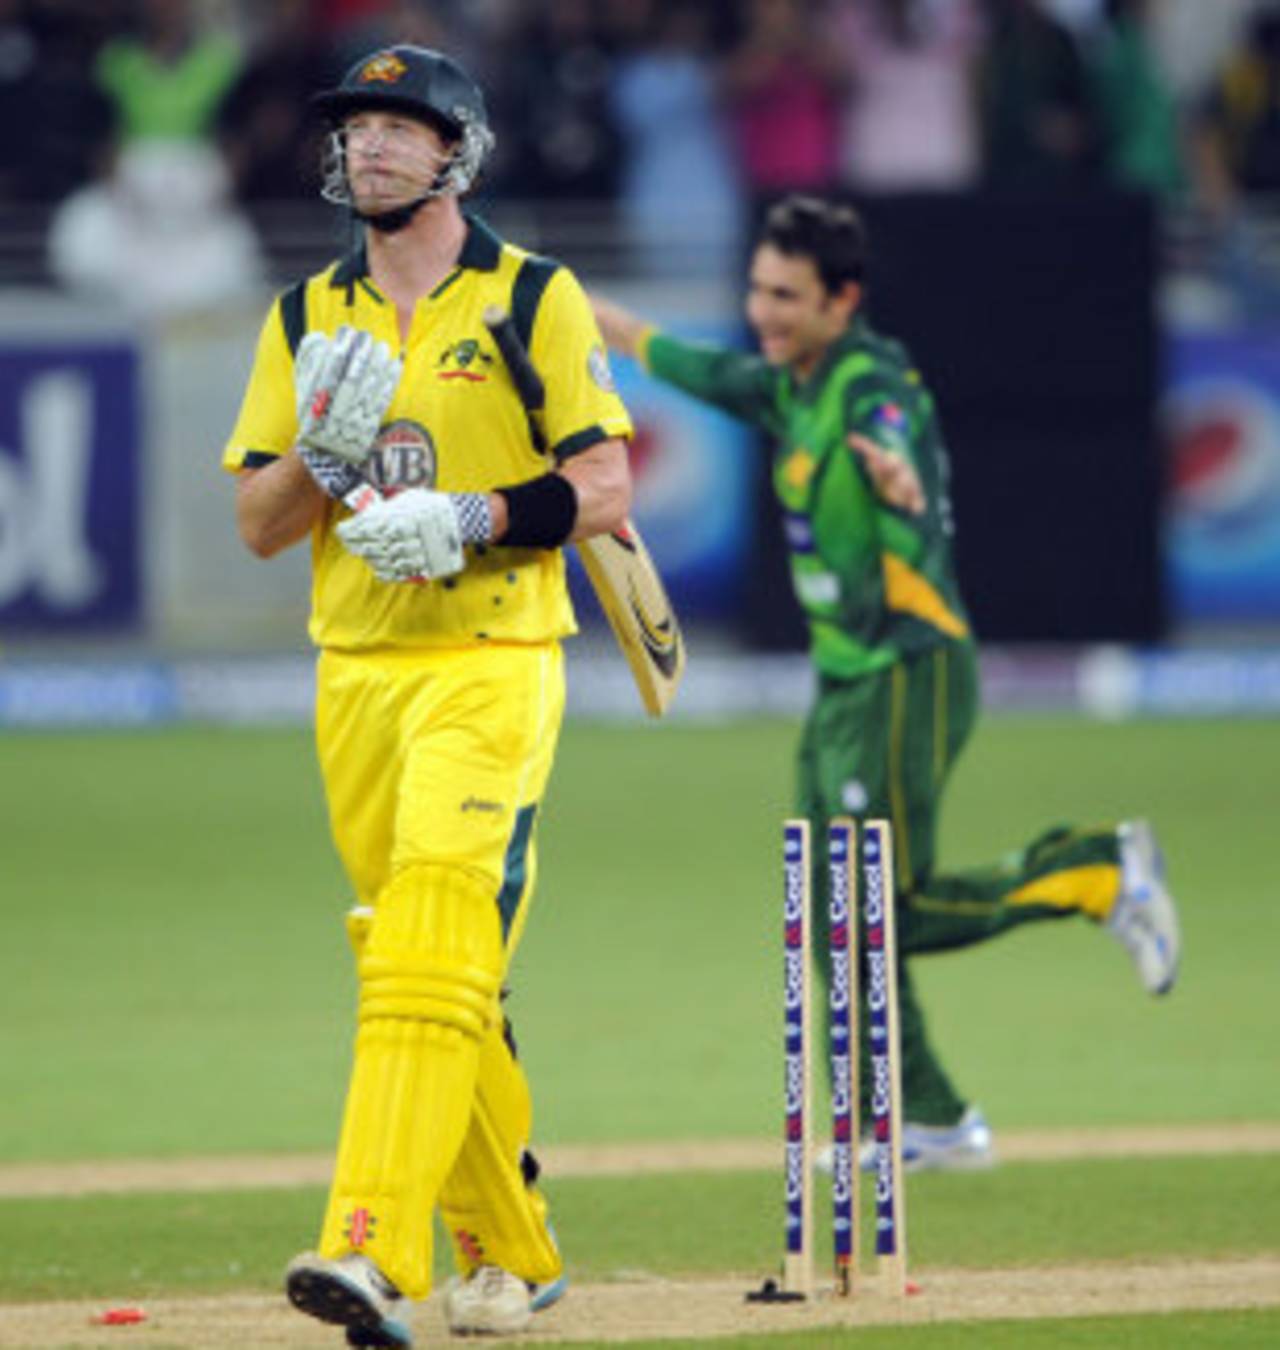 Cameron White walks off after being bowled by Saeed Ajmal, Pakistan v Australia, 1st T20I, Dubai, September 5, 2012